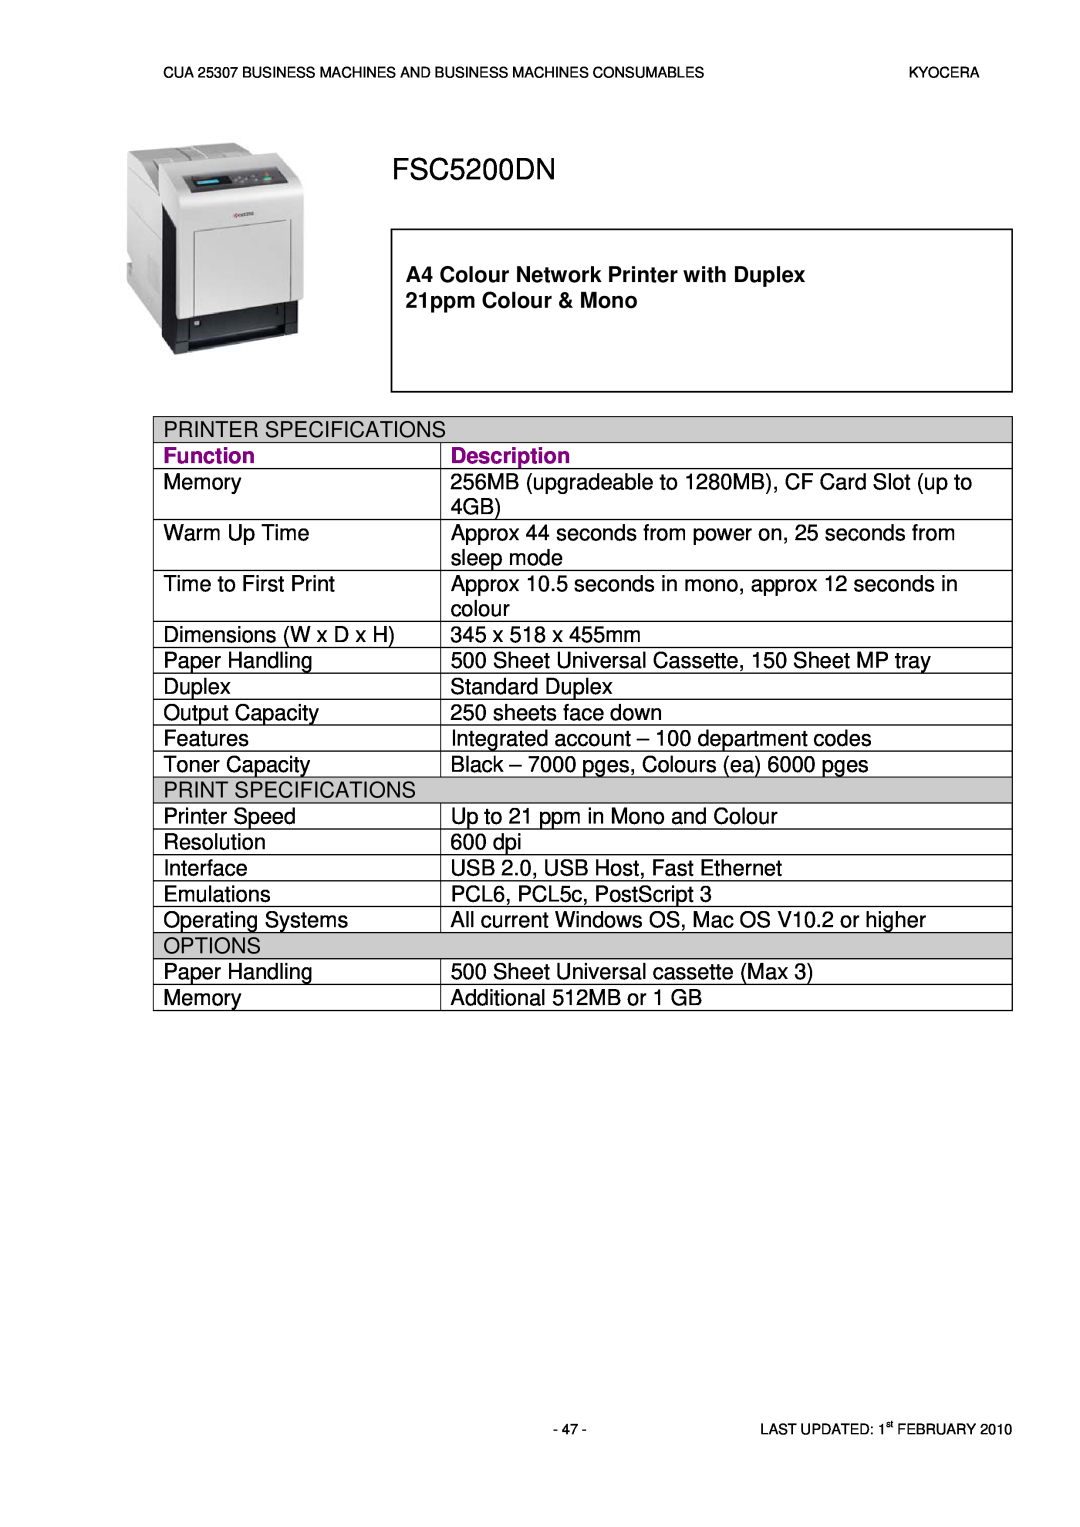 Kyocera CUA 25307 manual FSC5200DN, Function, Description 